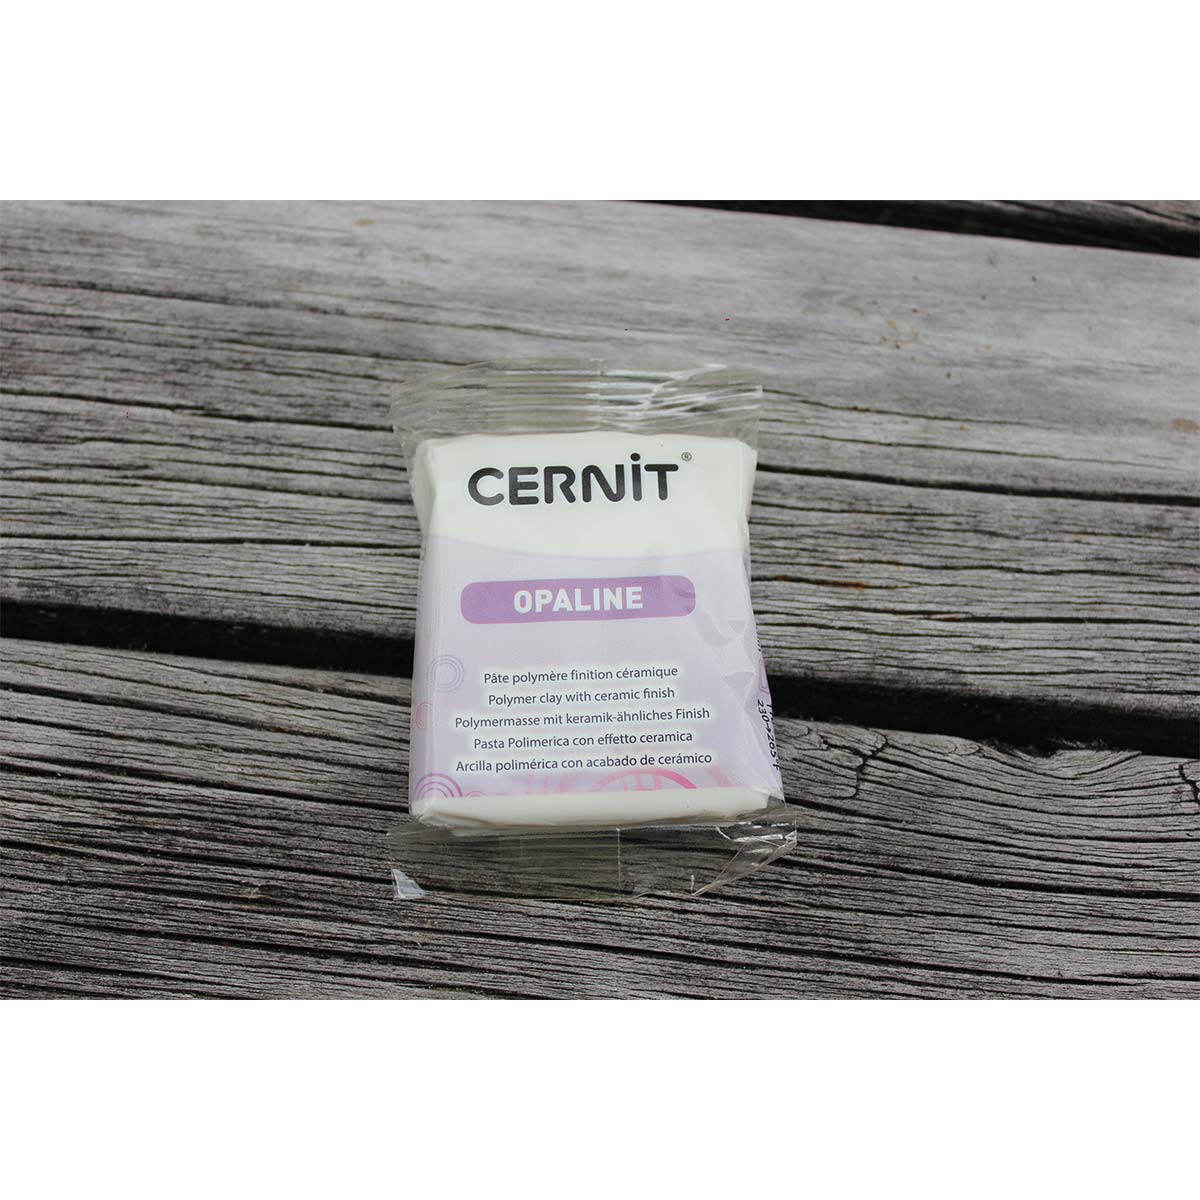 Cernit Translucent Polymer Clay - Translucent 250g block